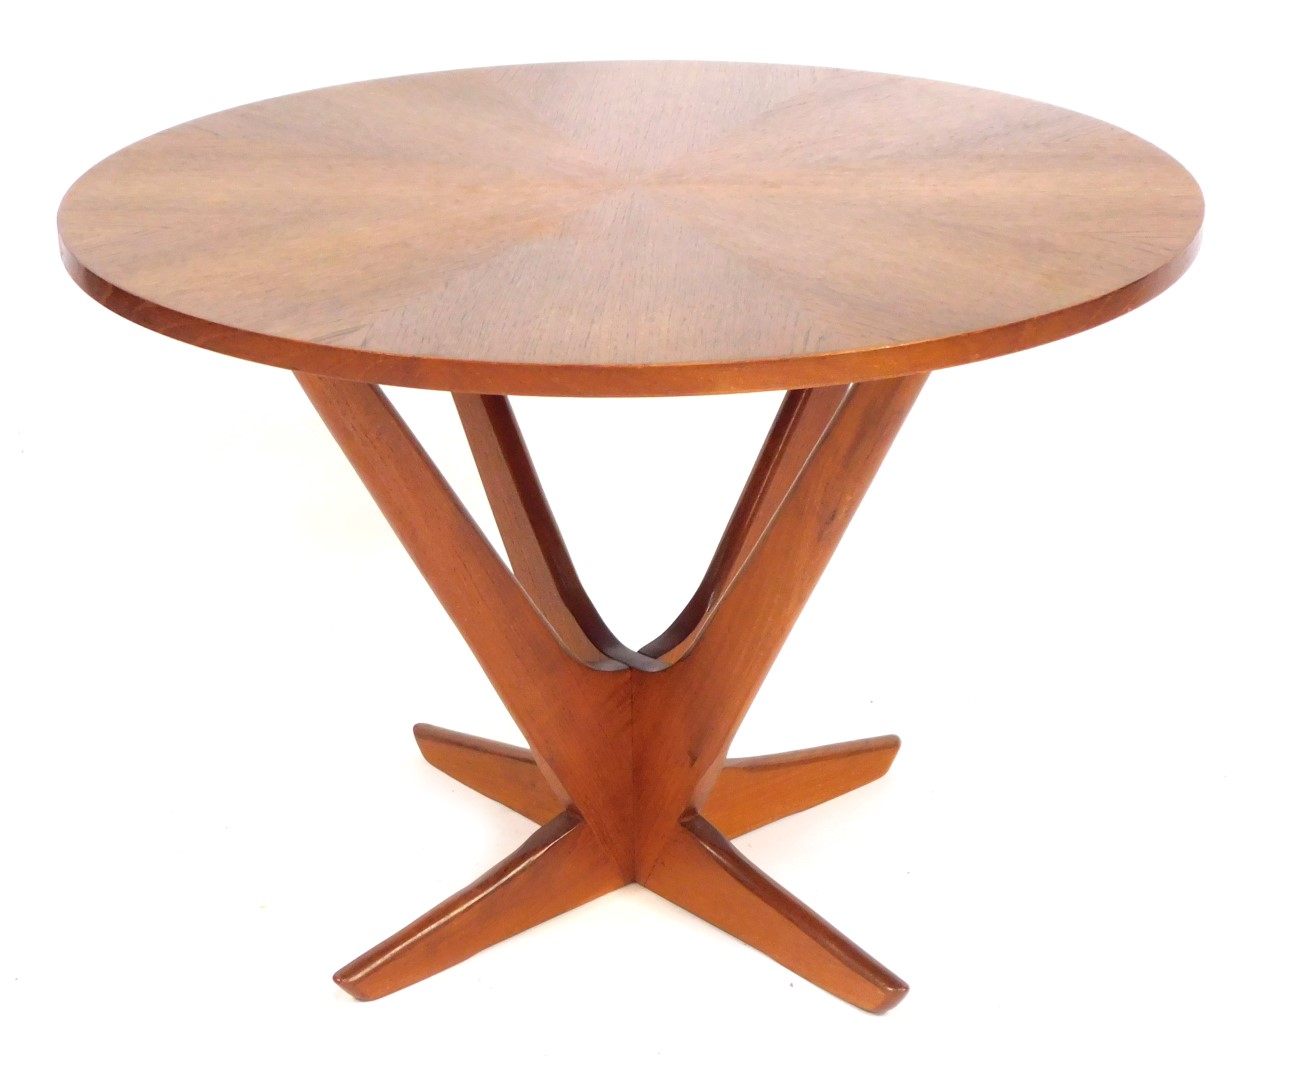 A Soren Georg Jensen Kubus radial teak Danish coffee table, with a sectional circular top, raised on